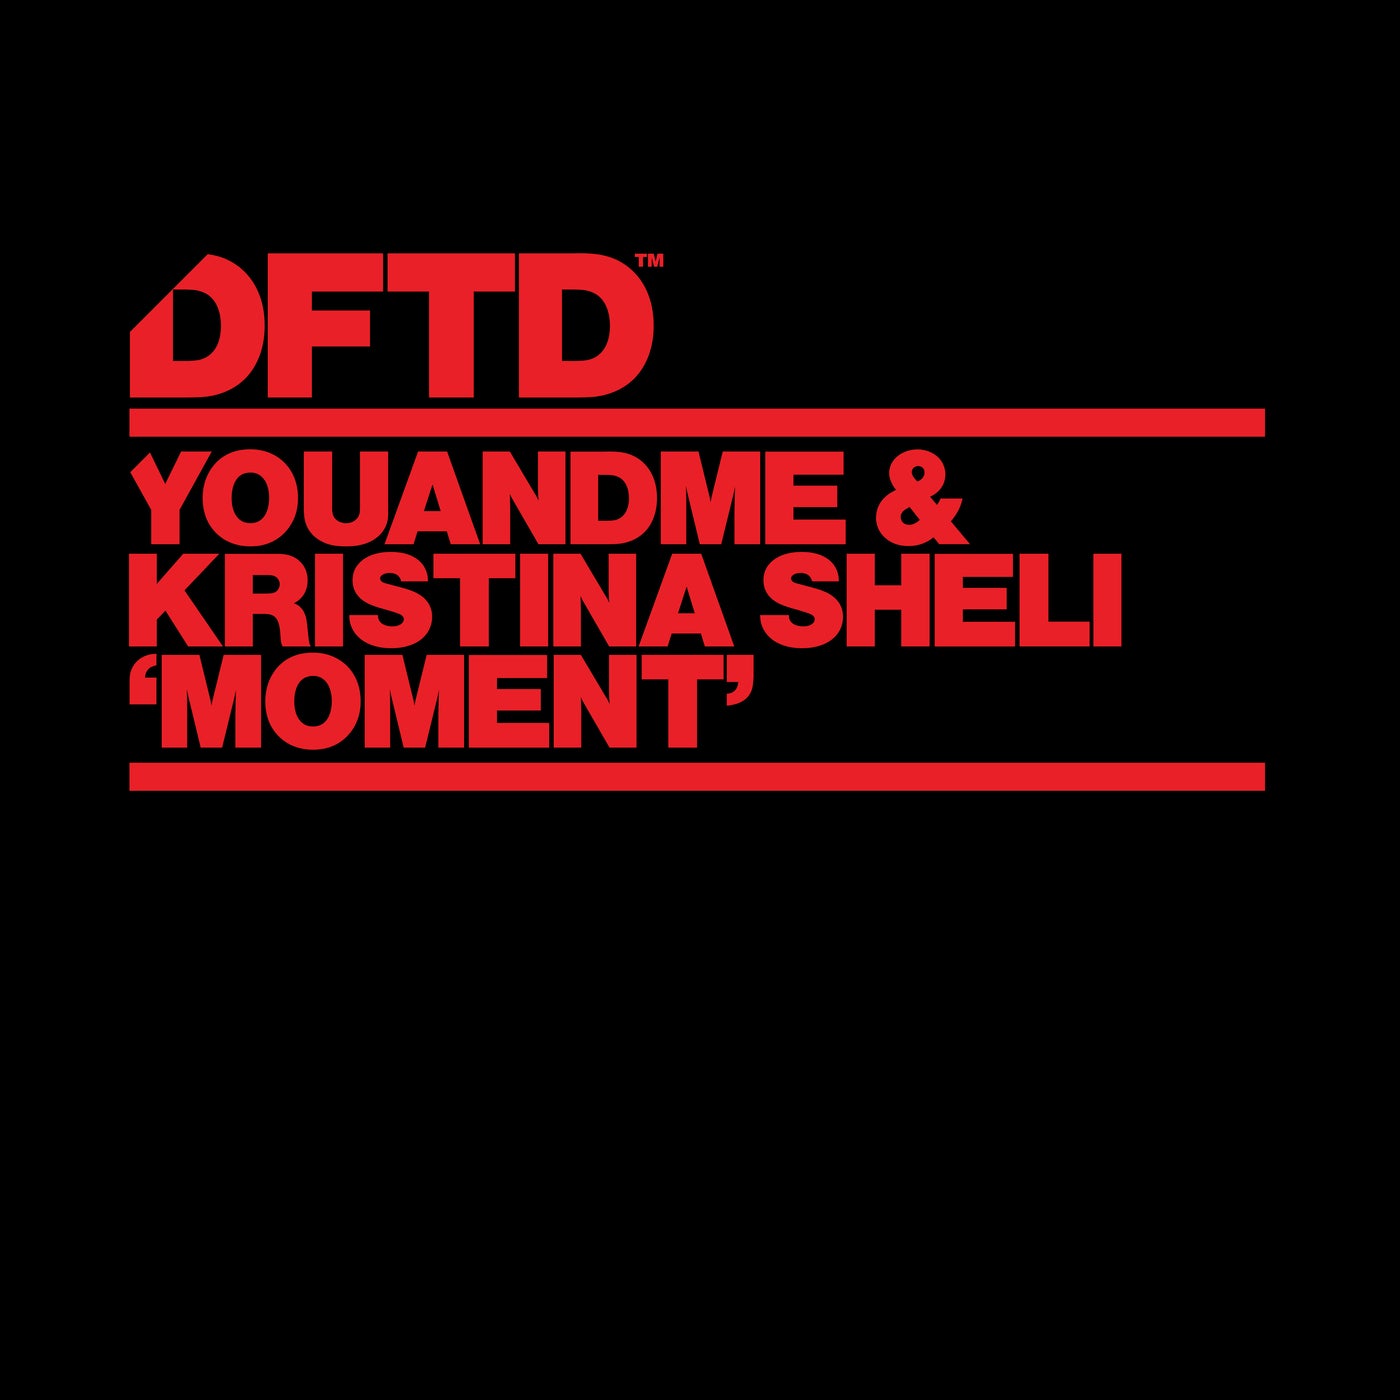 youANDme & Kristina Sheli - Moment / DFTD